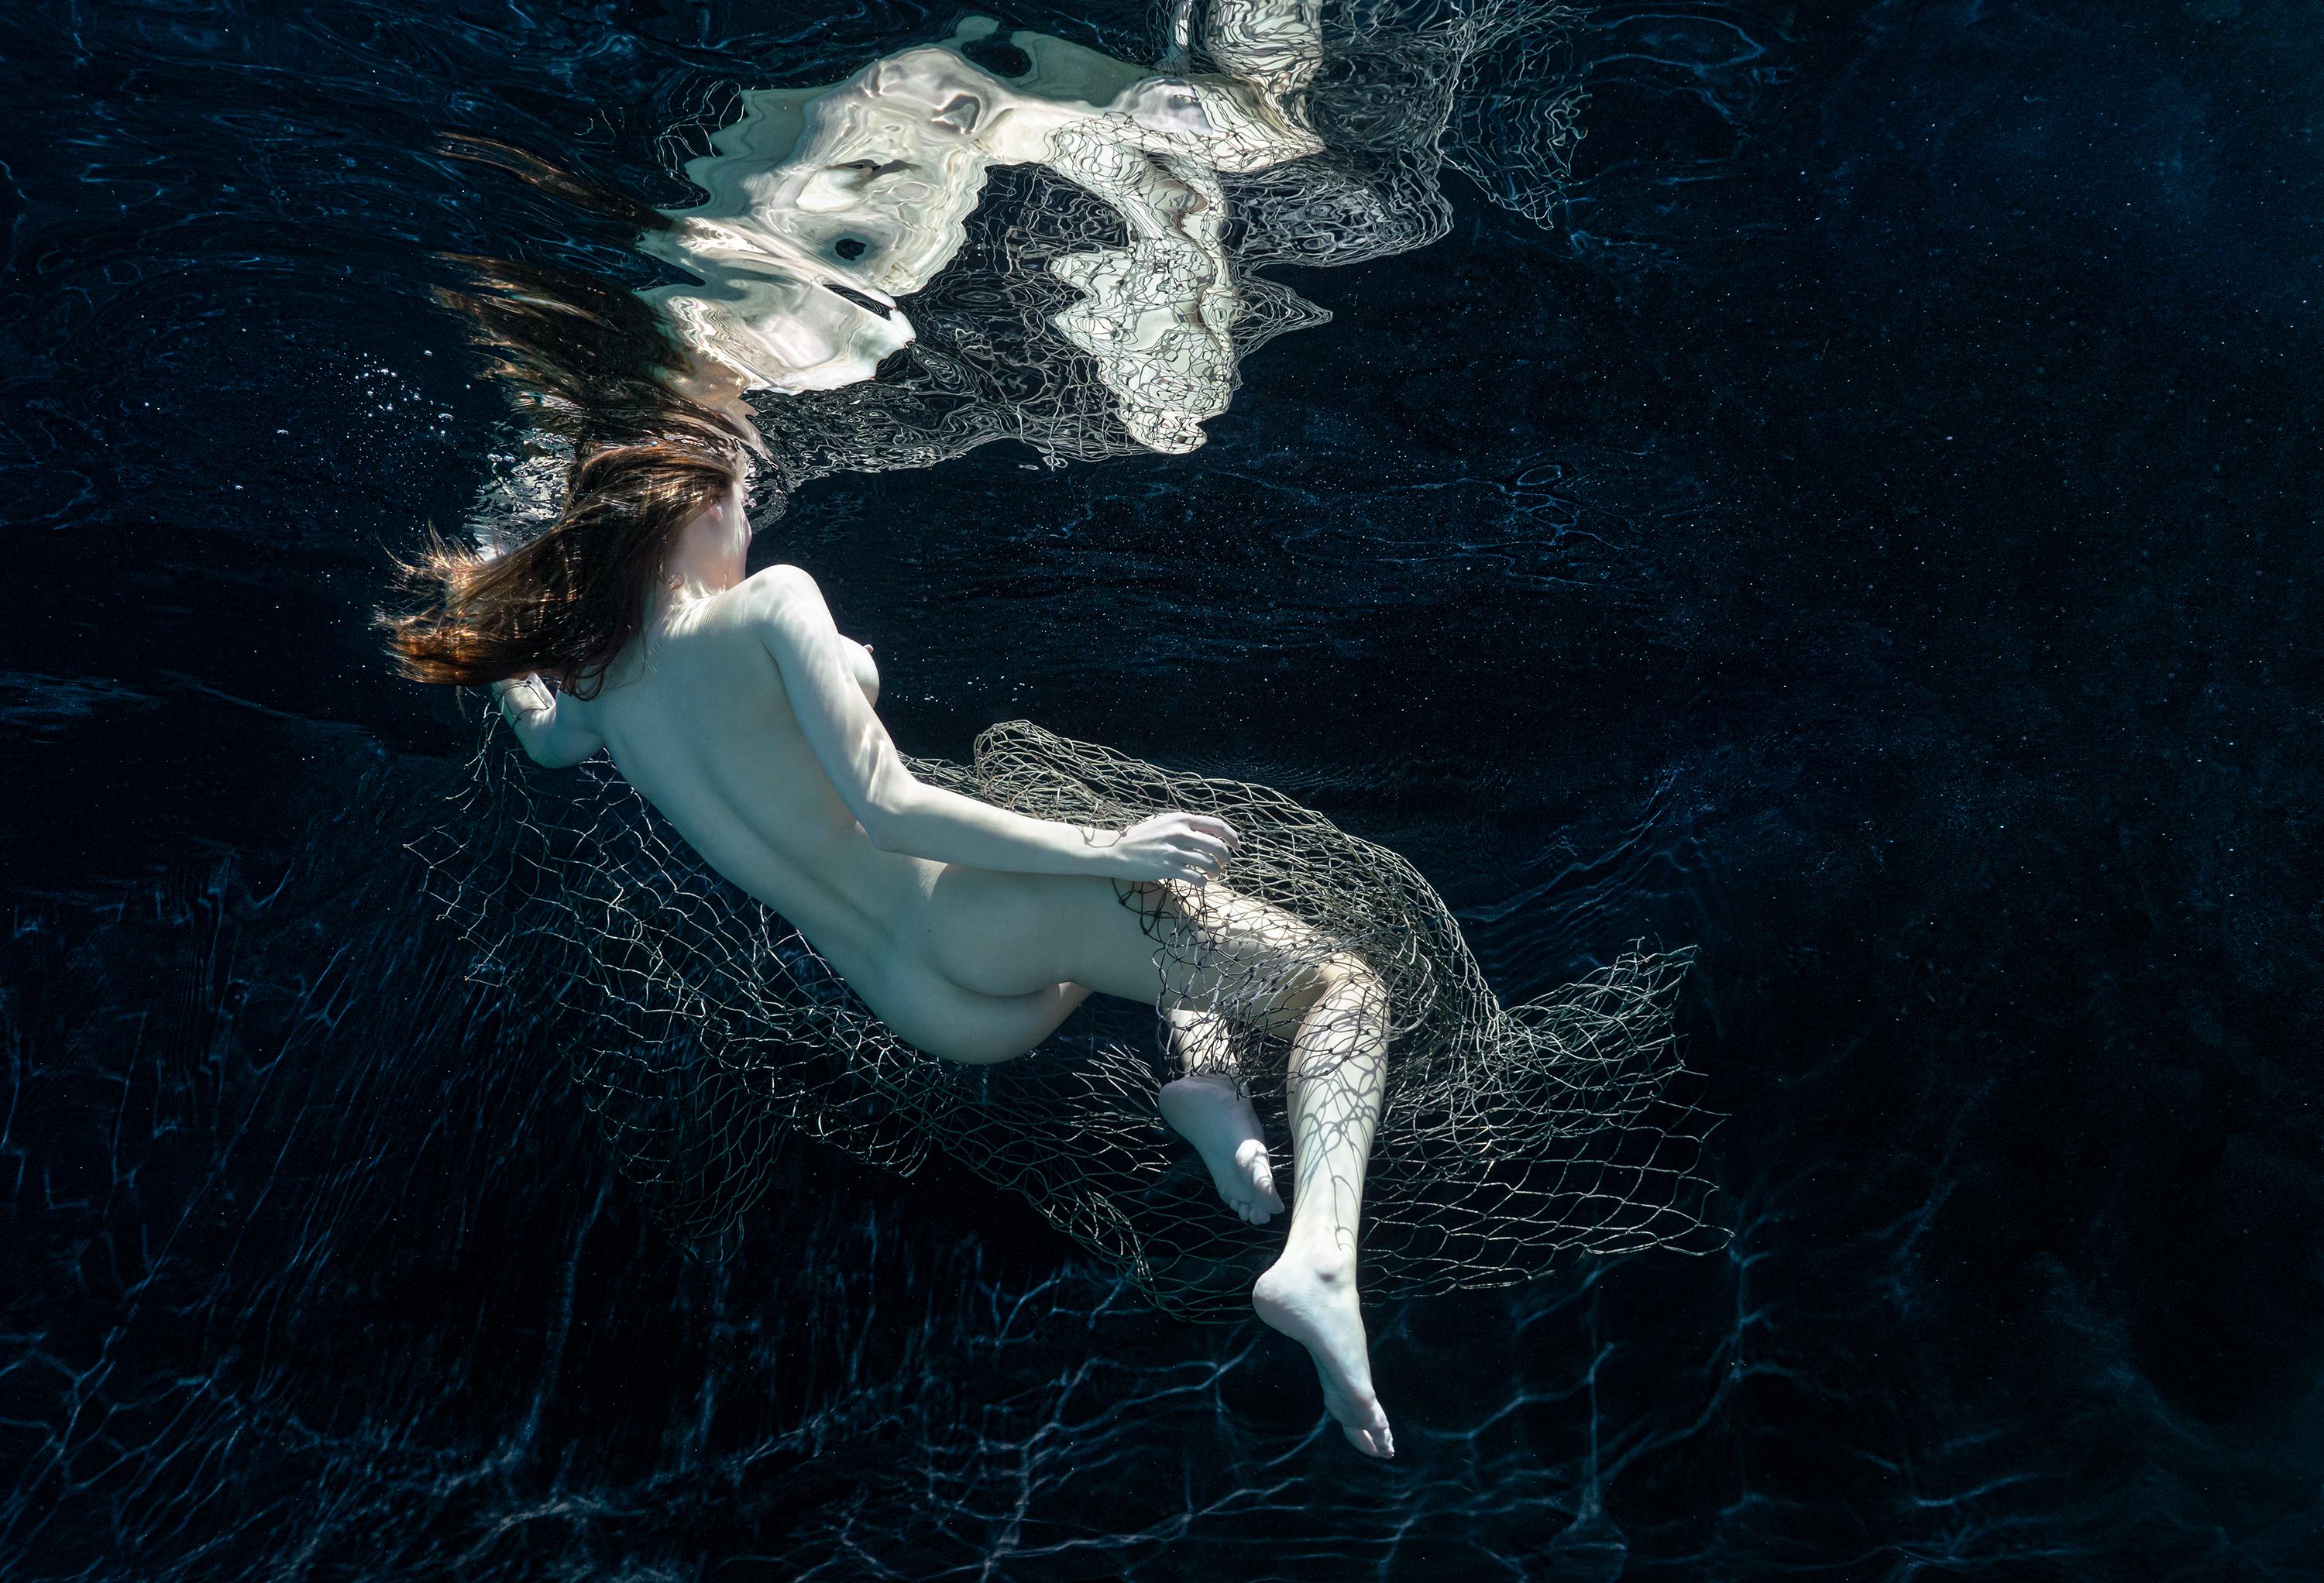 Constellation - underwater nude photograph - archival pigment print 24x35"